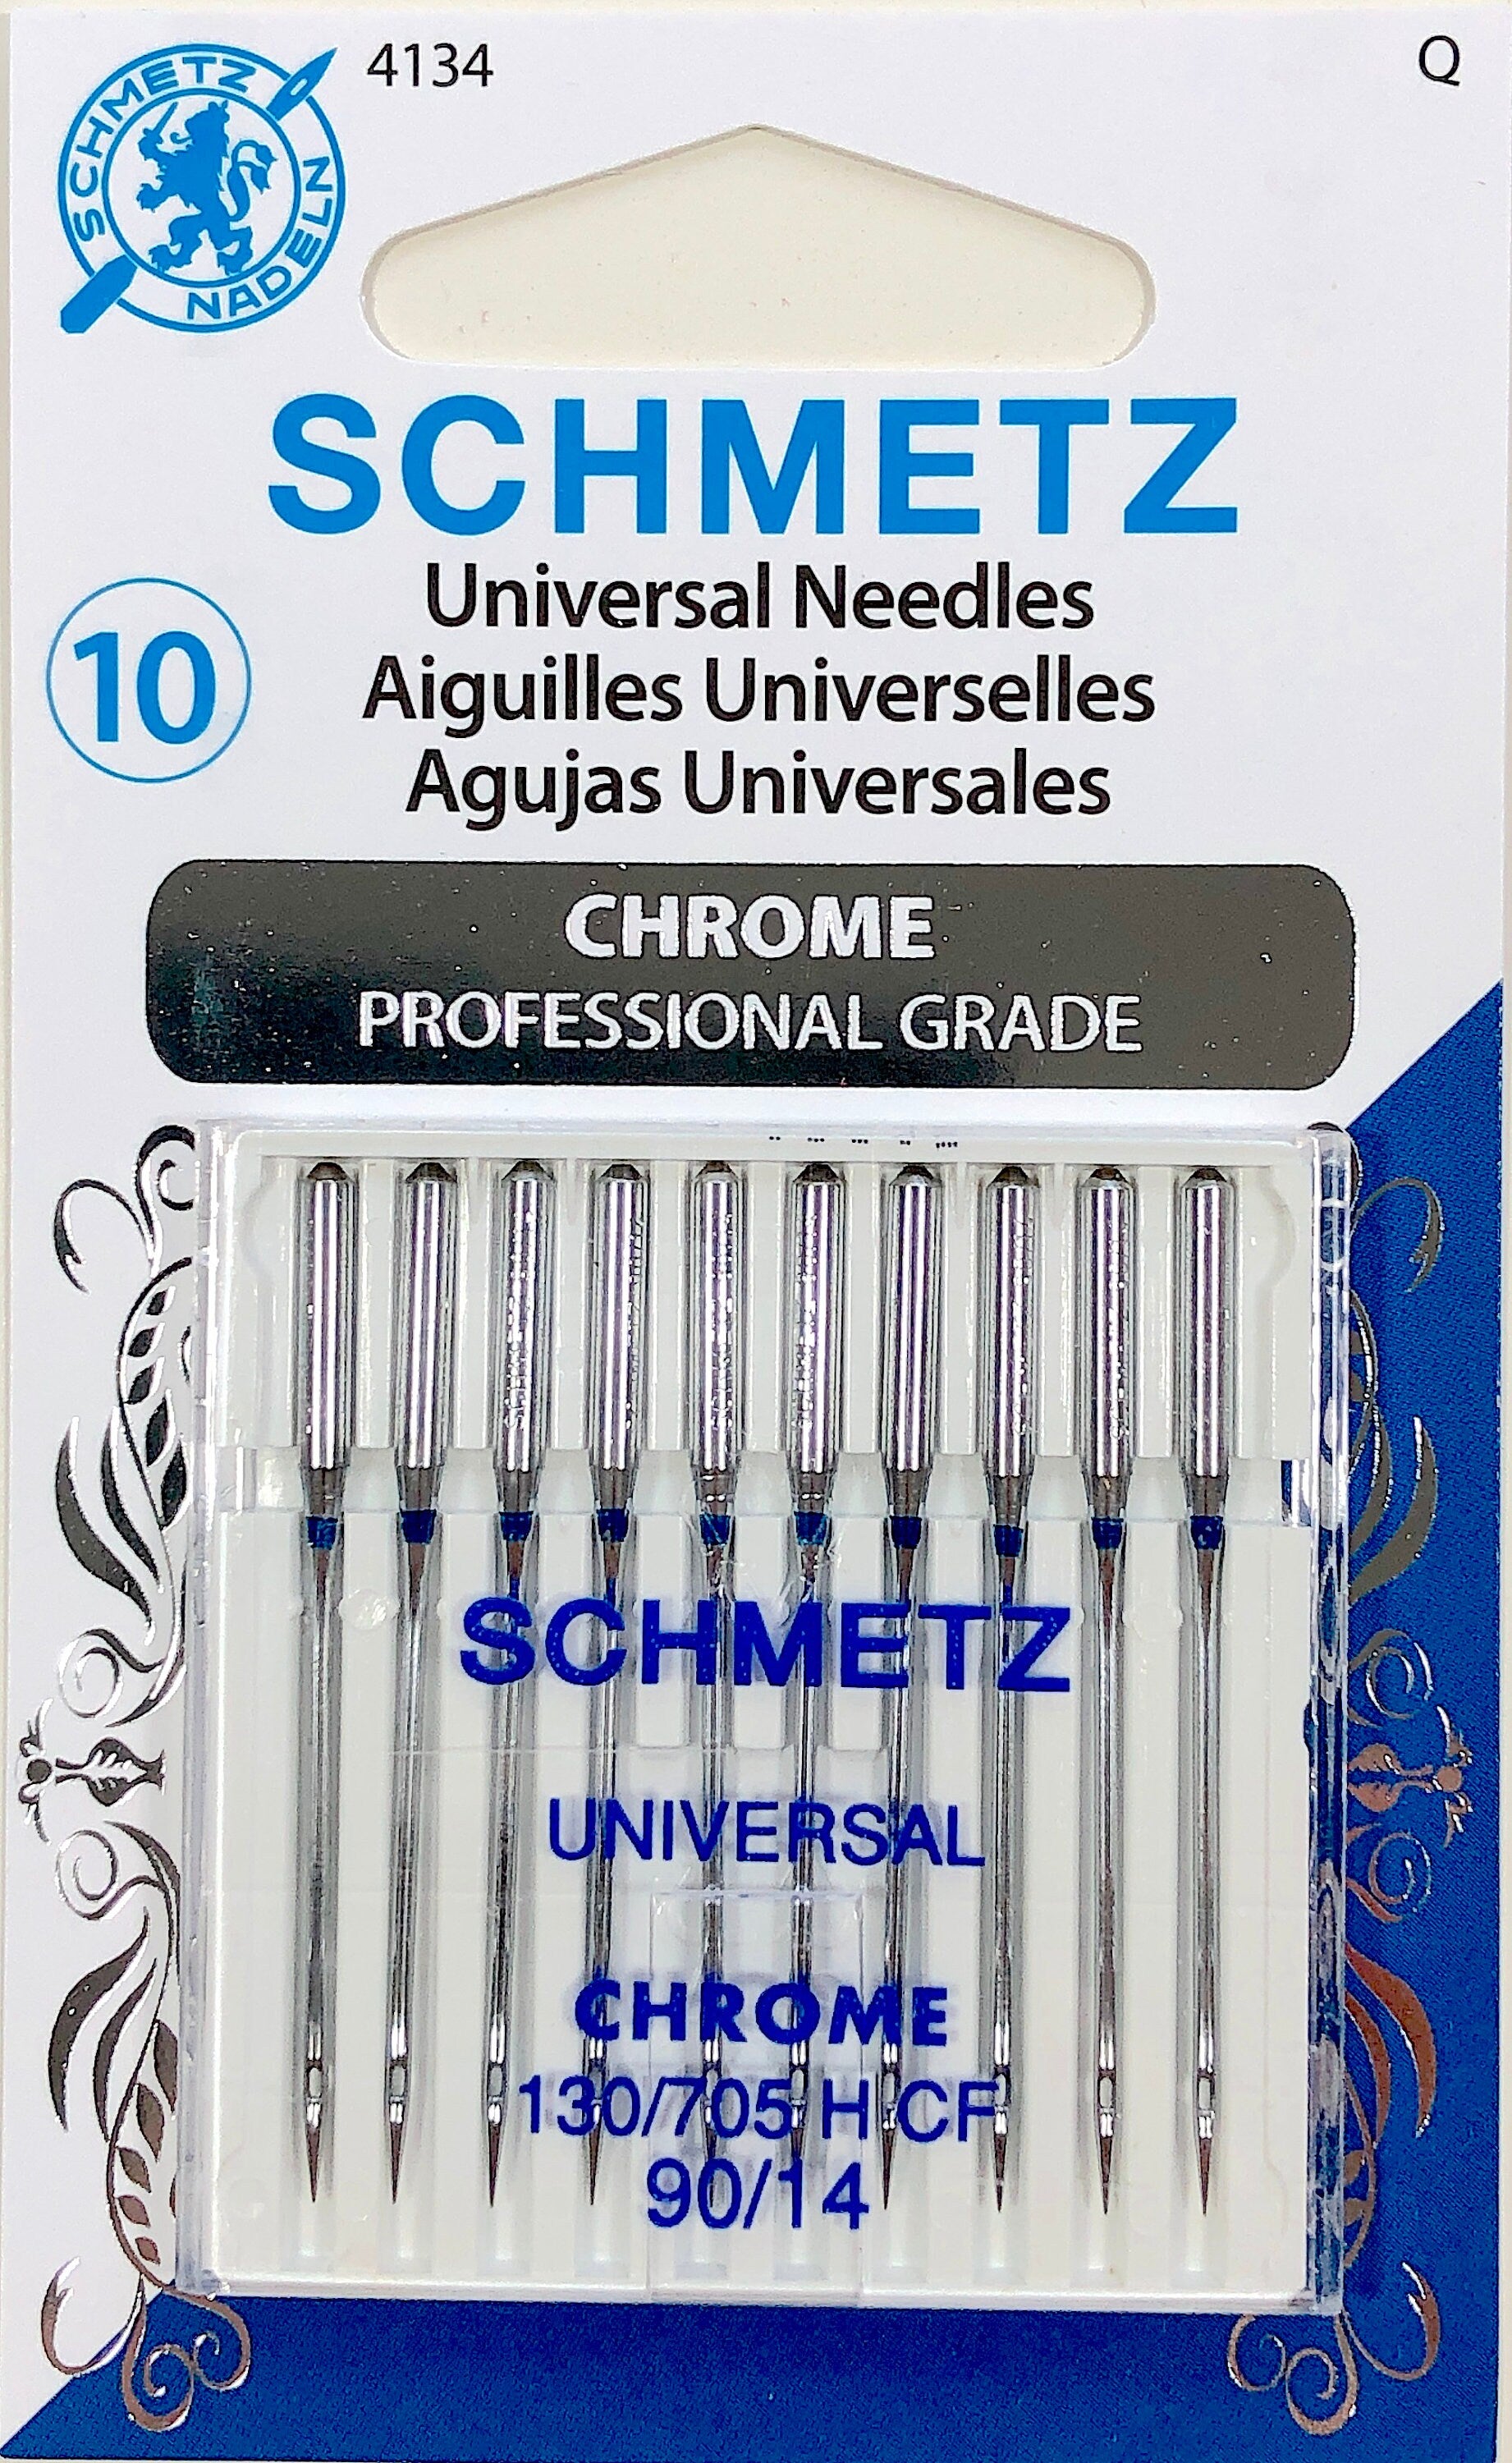 Schmetz Universal Chrome Professional Grade Sewing Machine Needles - 90/14